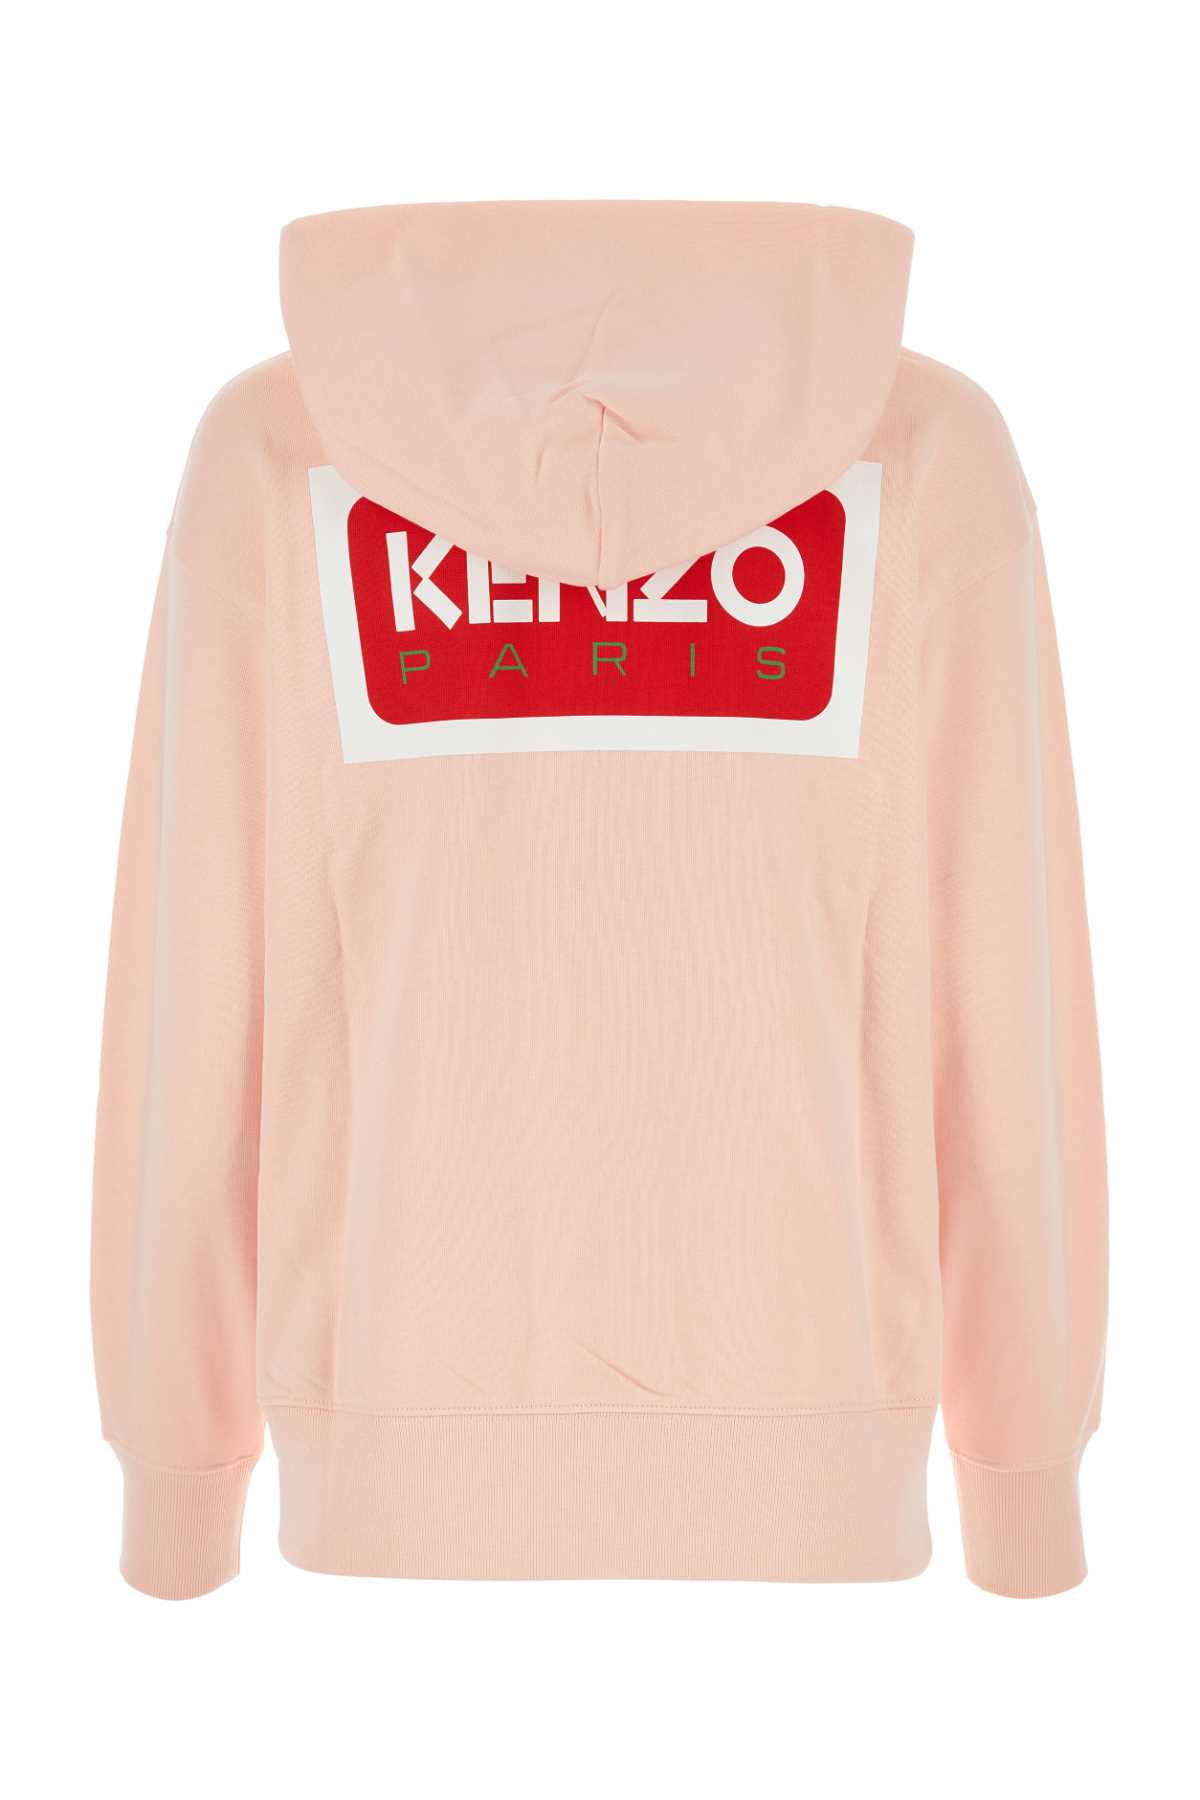 Kenzo Pastel Pink Cotton Sweatshirt In Fadedpink